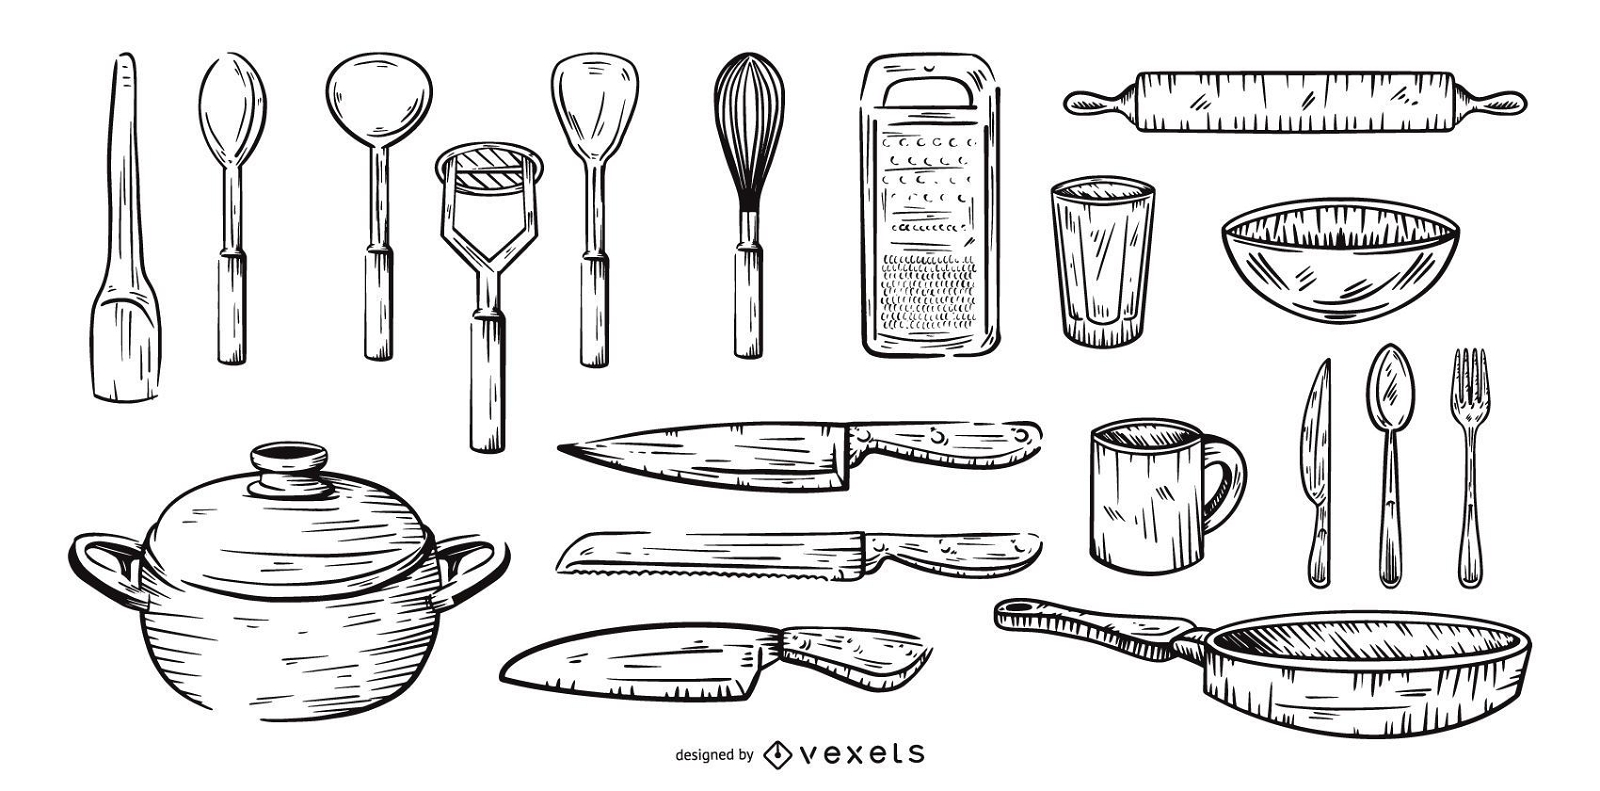 https://images.vexels.com/content/208026/preview/kitchen-tools-hand-drawn-set-d220db.png